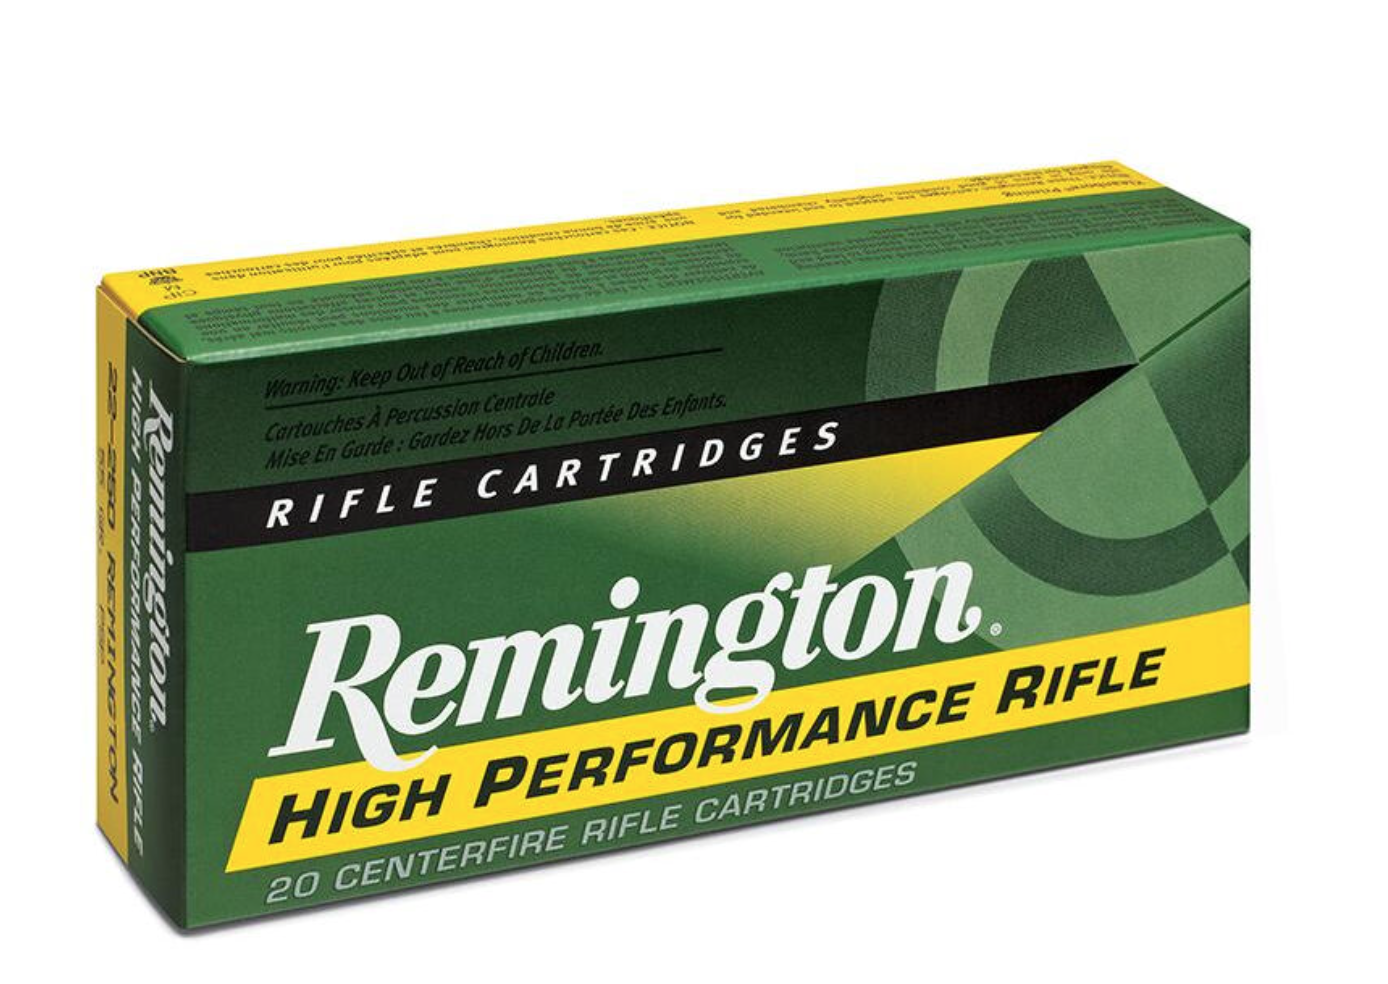 Remington High Performance Rifle .375 H&H Magnum Ammunition 20 Rounds 270 Grain Soft Point 2690fps